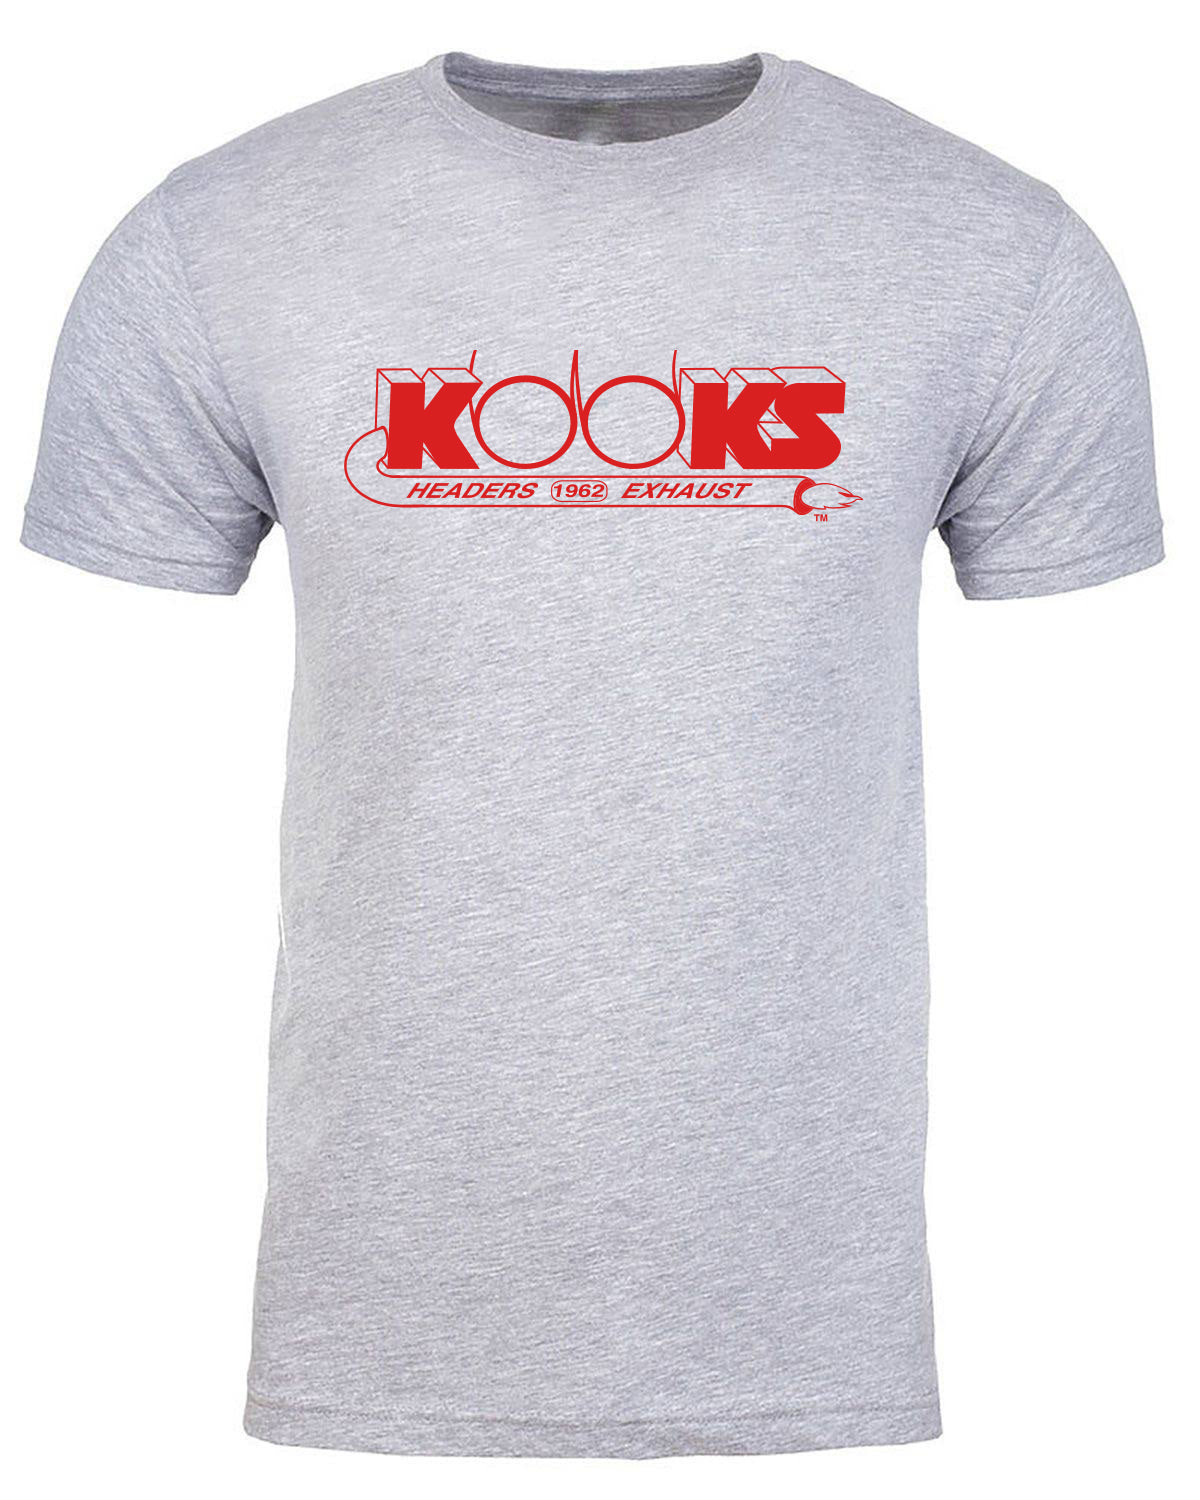 Kooks Custom Headers T-Shirt TS-100647-05